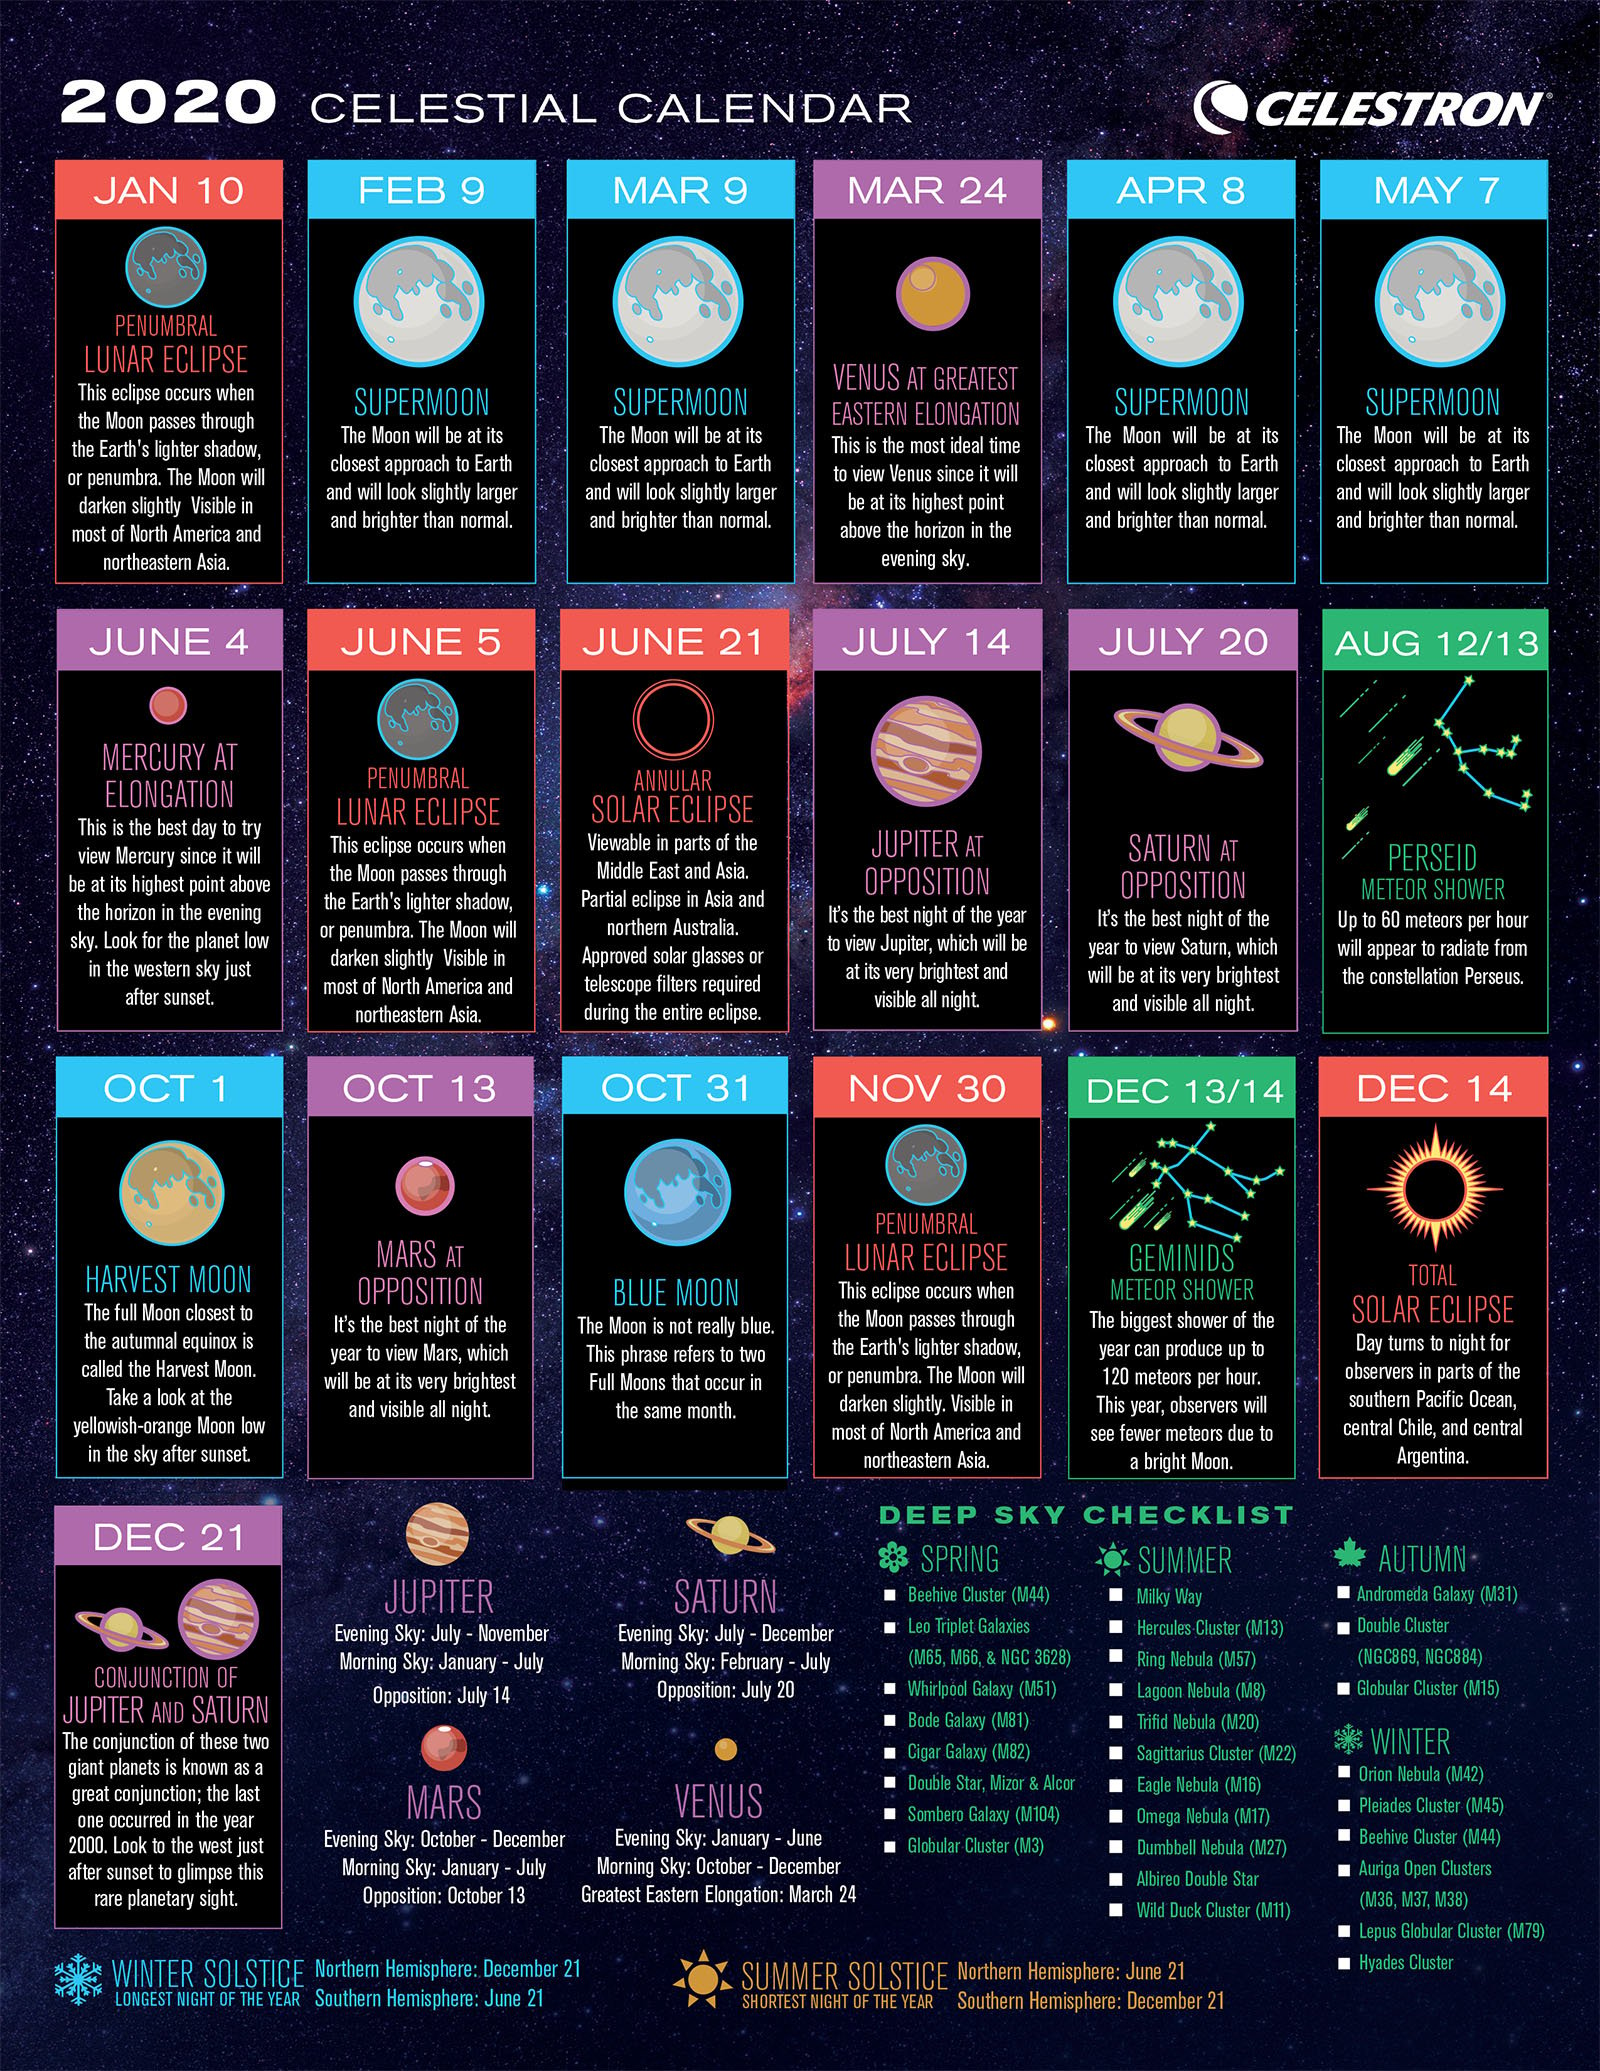 Here's a 2020 Celestial Calendar for Astrophotographers